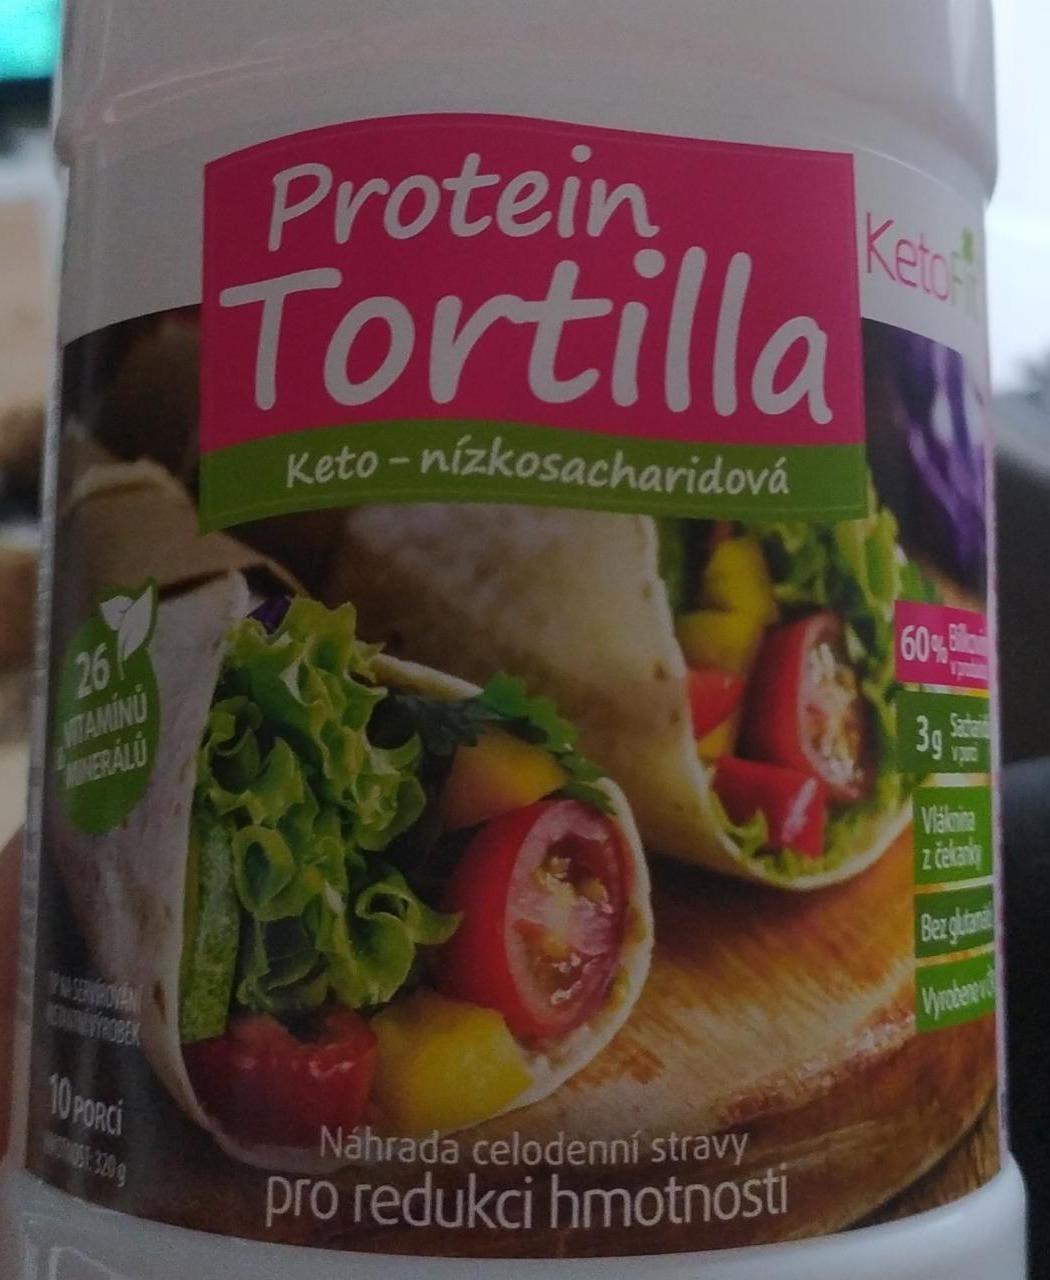 Fotografie - Protein Tortilla Keto - nízkosacharidová Ketofit